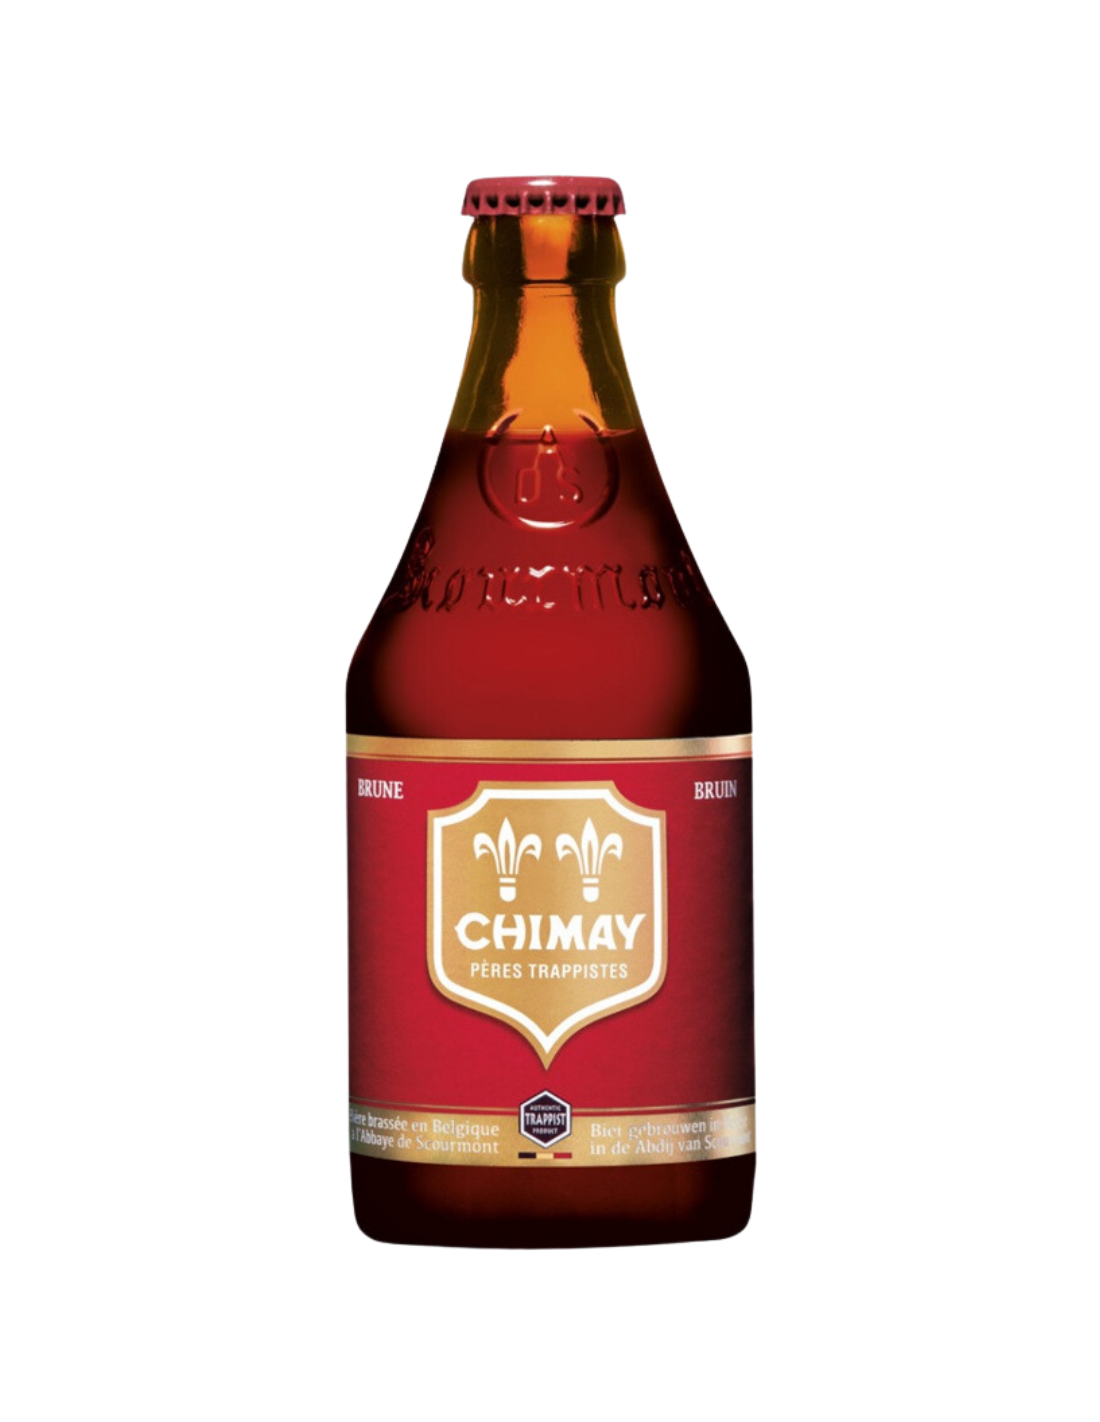 Bere rosie, nefiltrata Chimay Red, 8% alc., 0.33L, Belgia alcooldiscount.ro